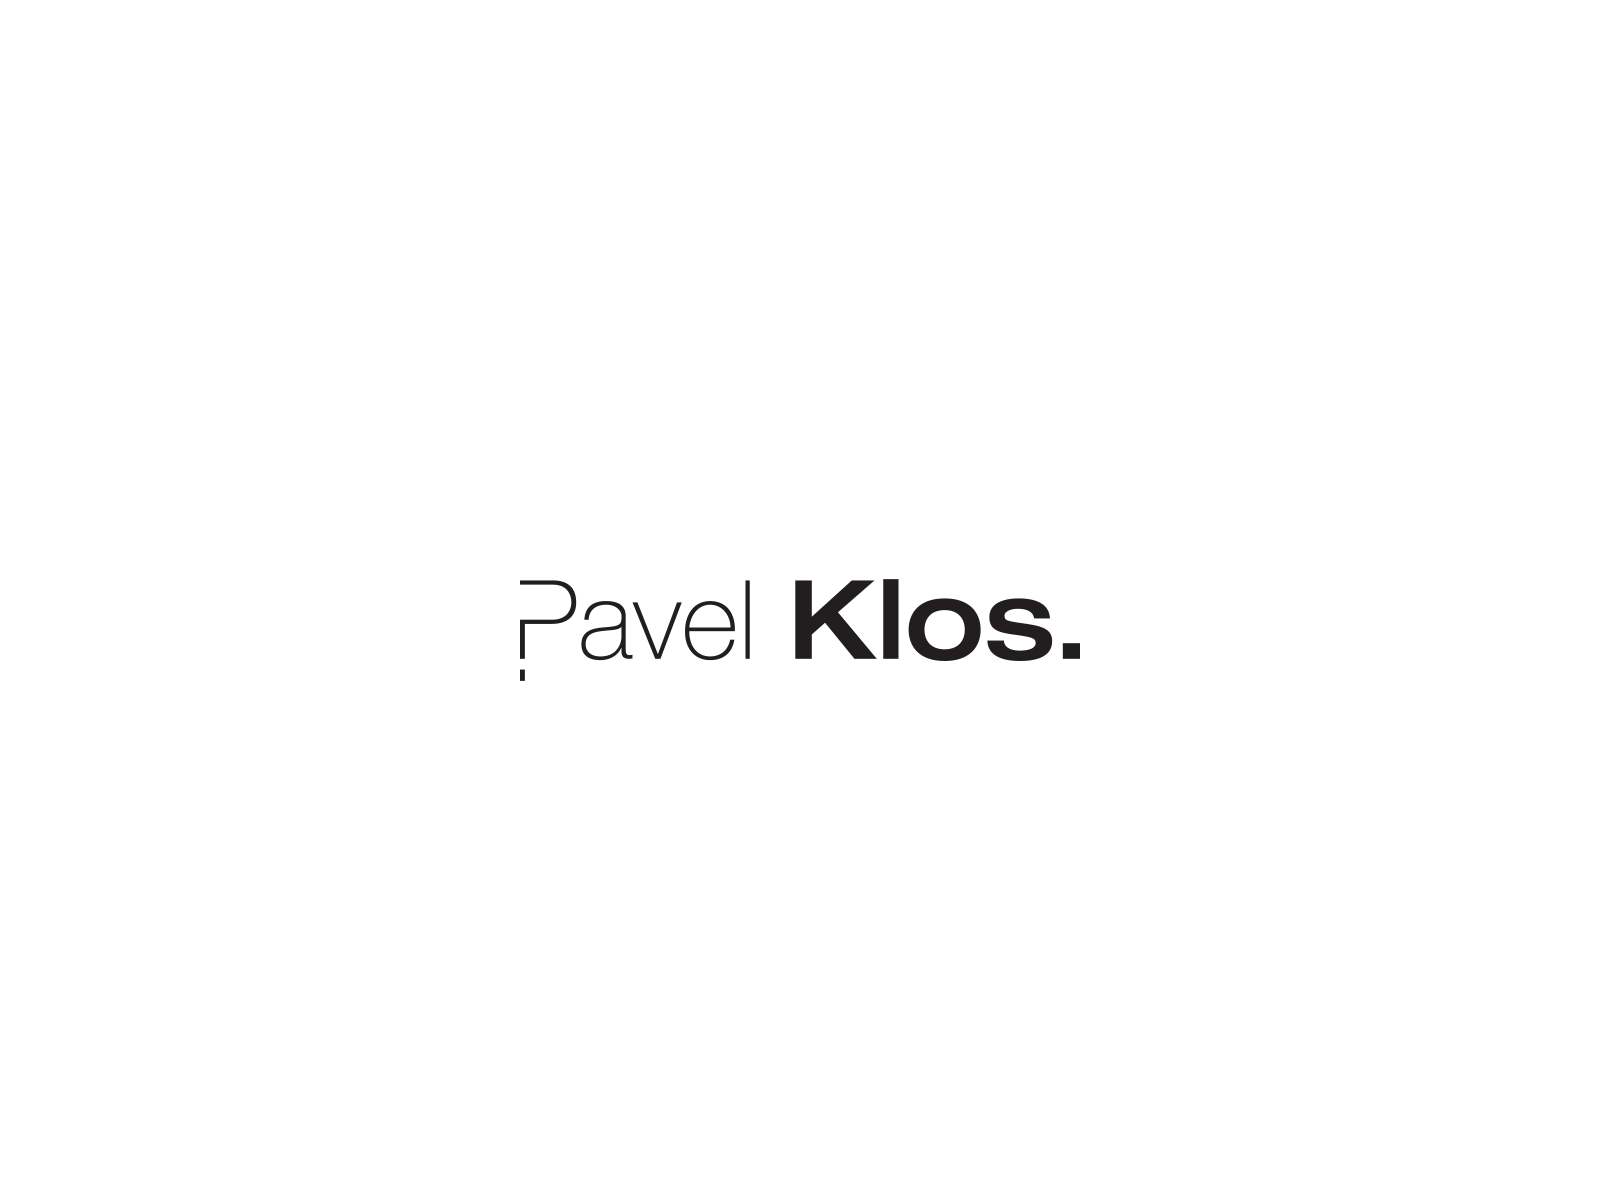 Pavel Klos | Philosopher